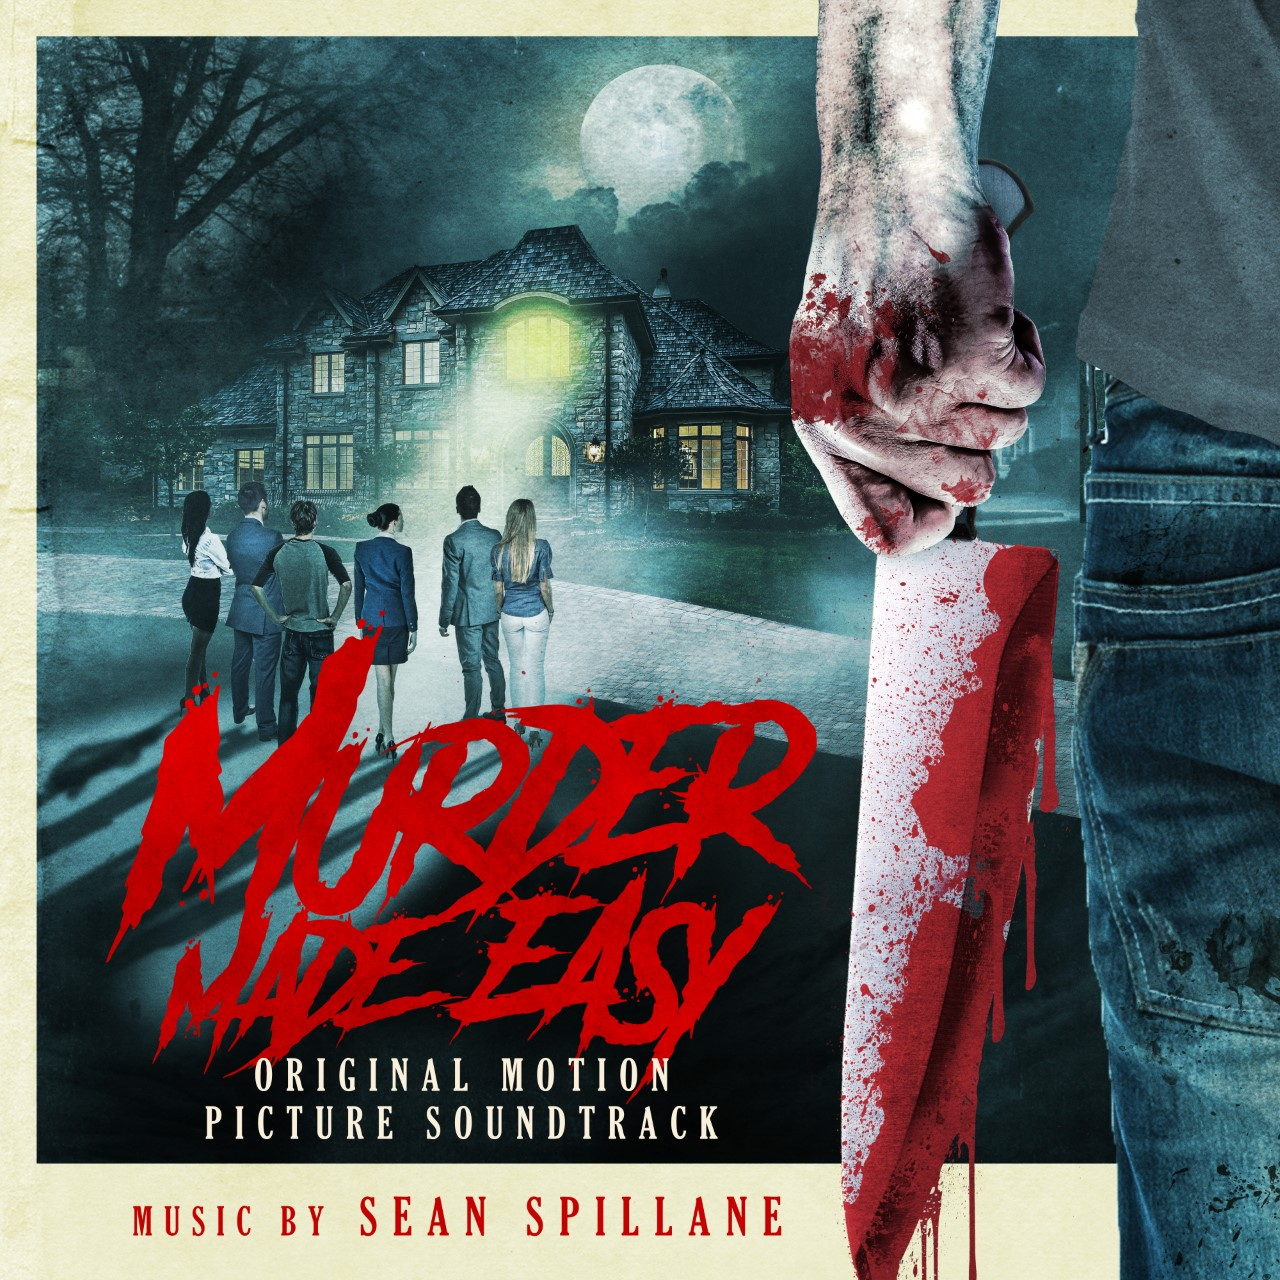 [News] MURDER MADE EASY Original Soundtrack Available Digitally Today!